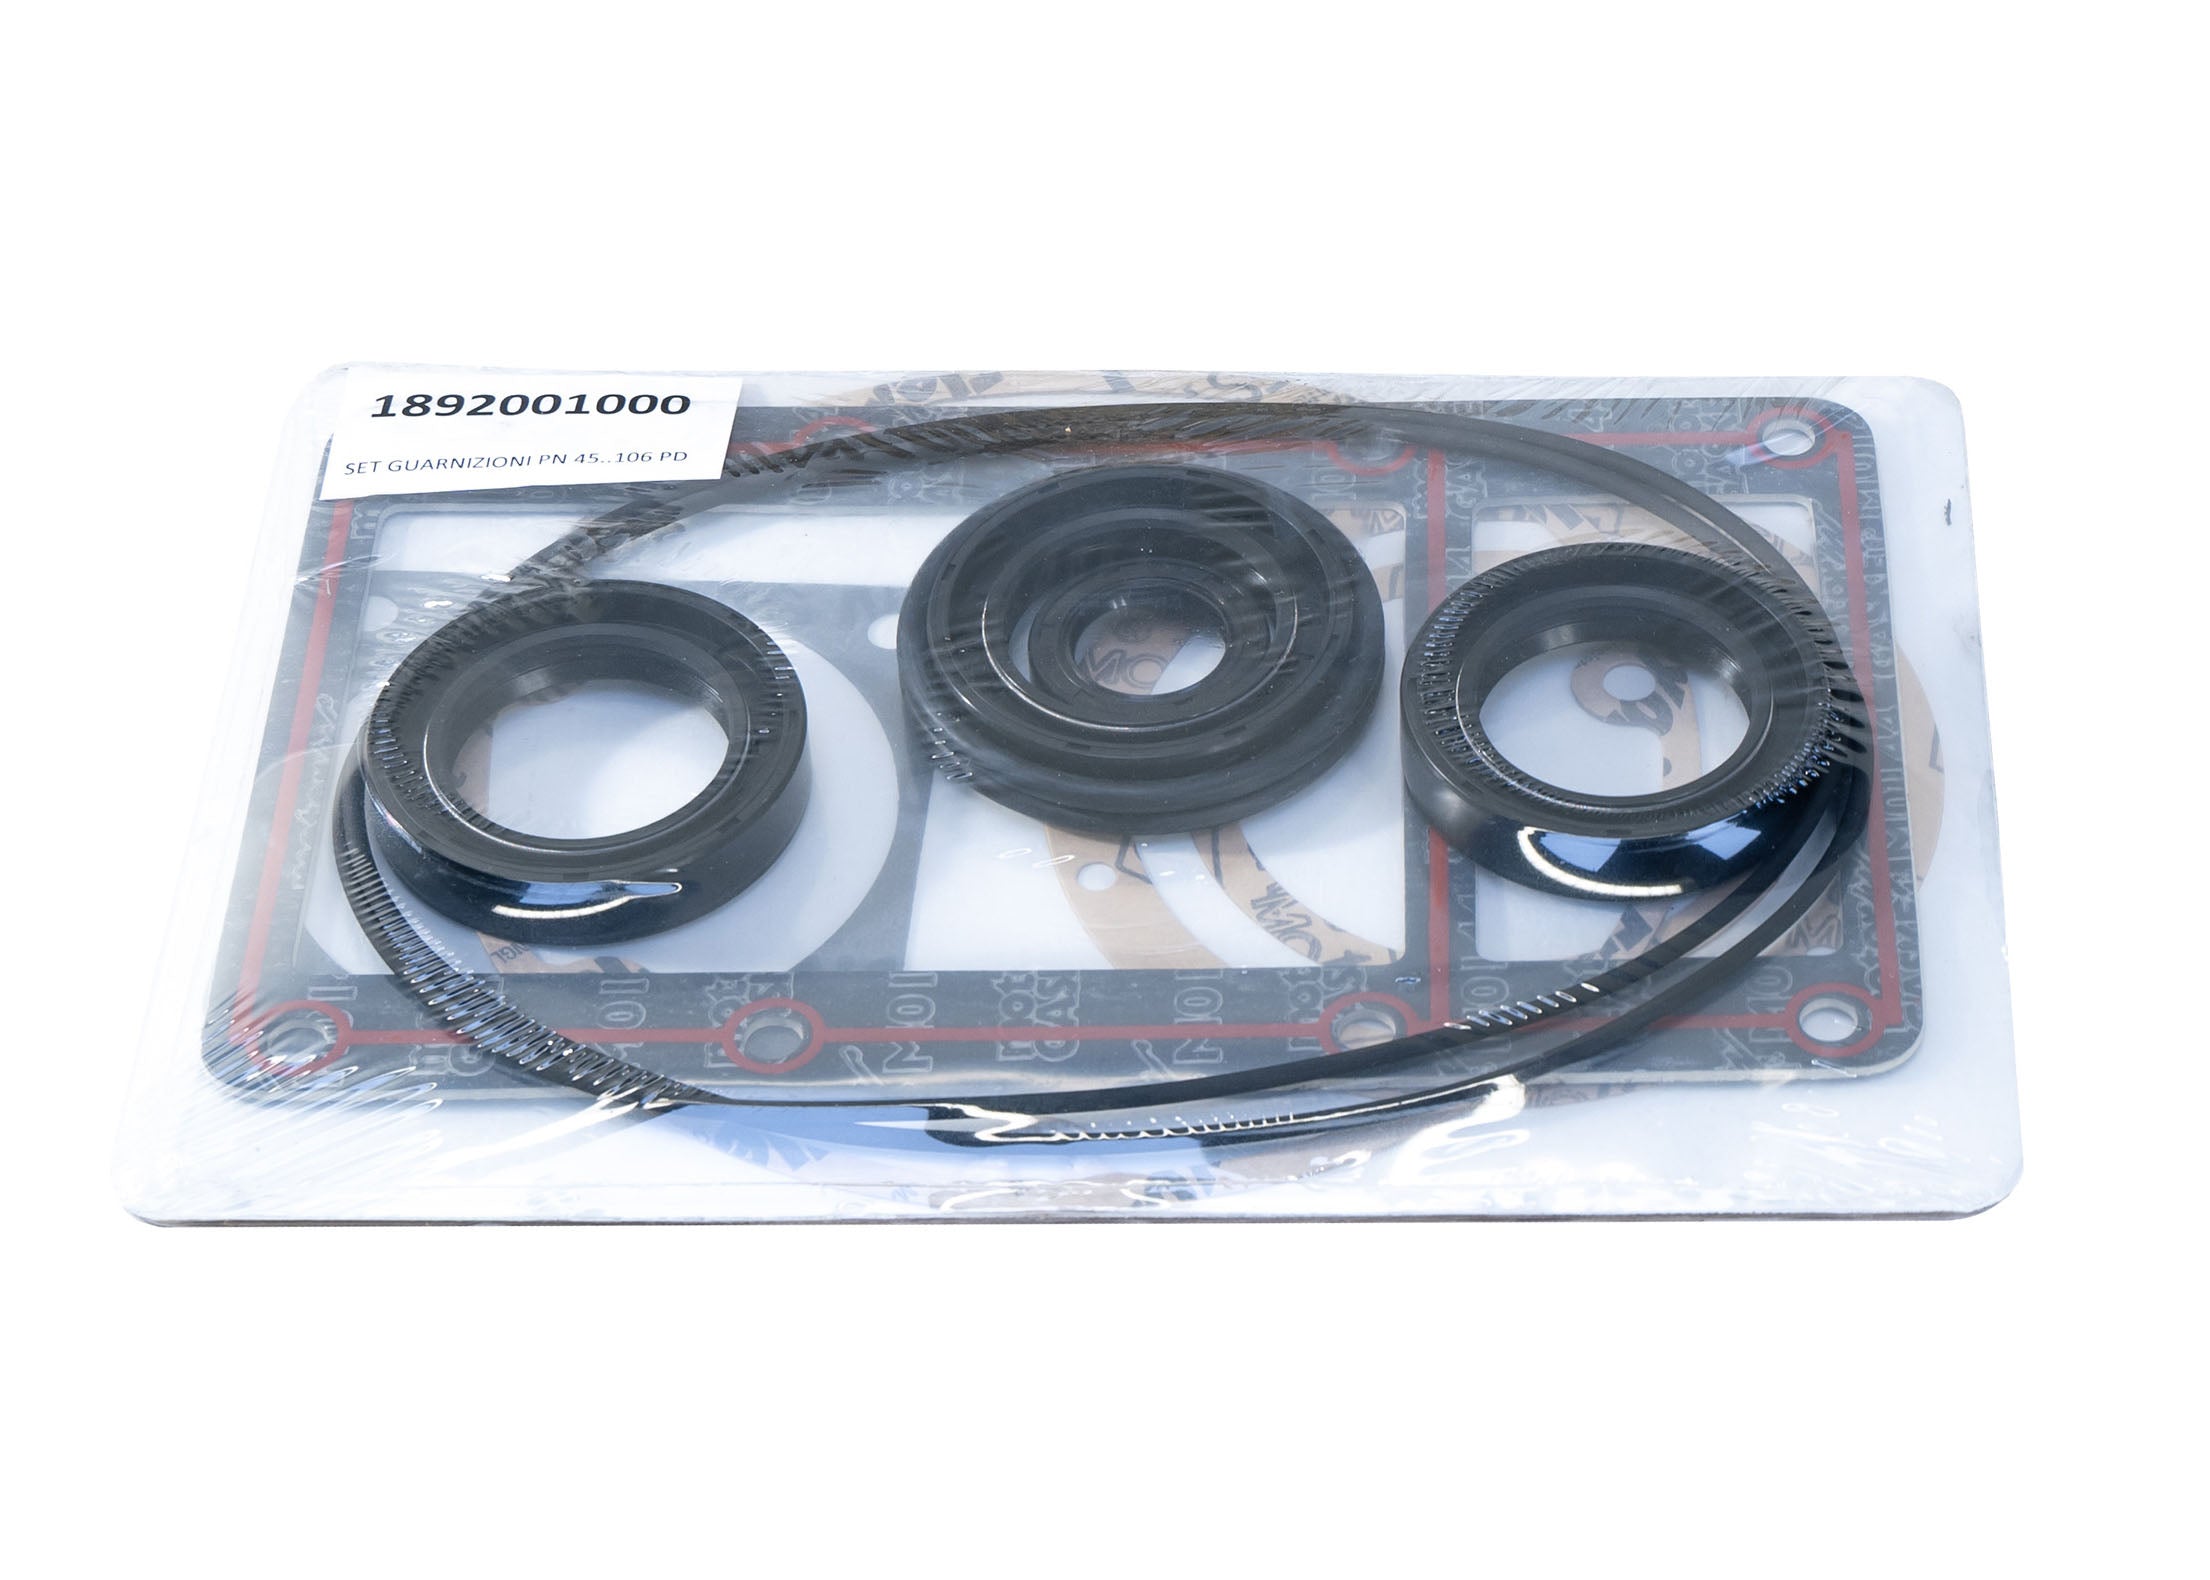 Jurop Seal and Gasket Kit for PN & R series